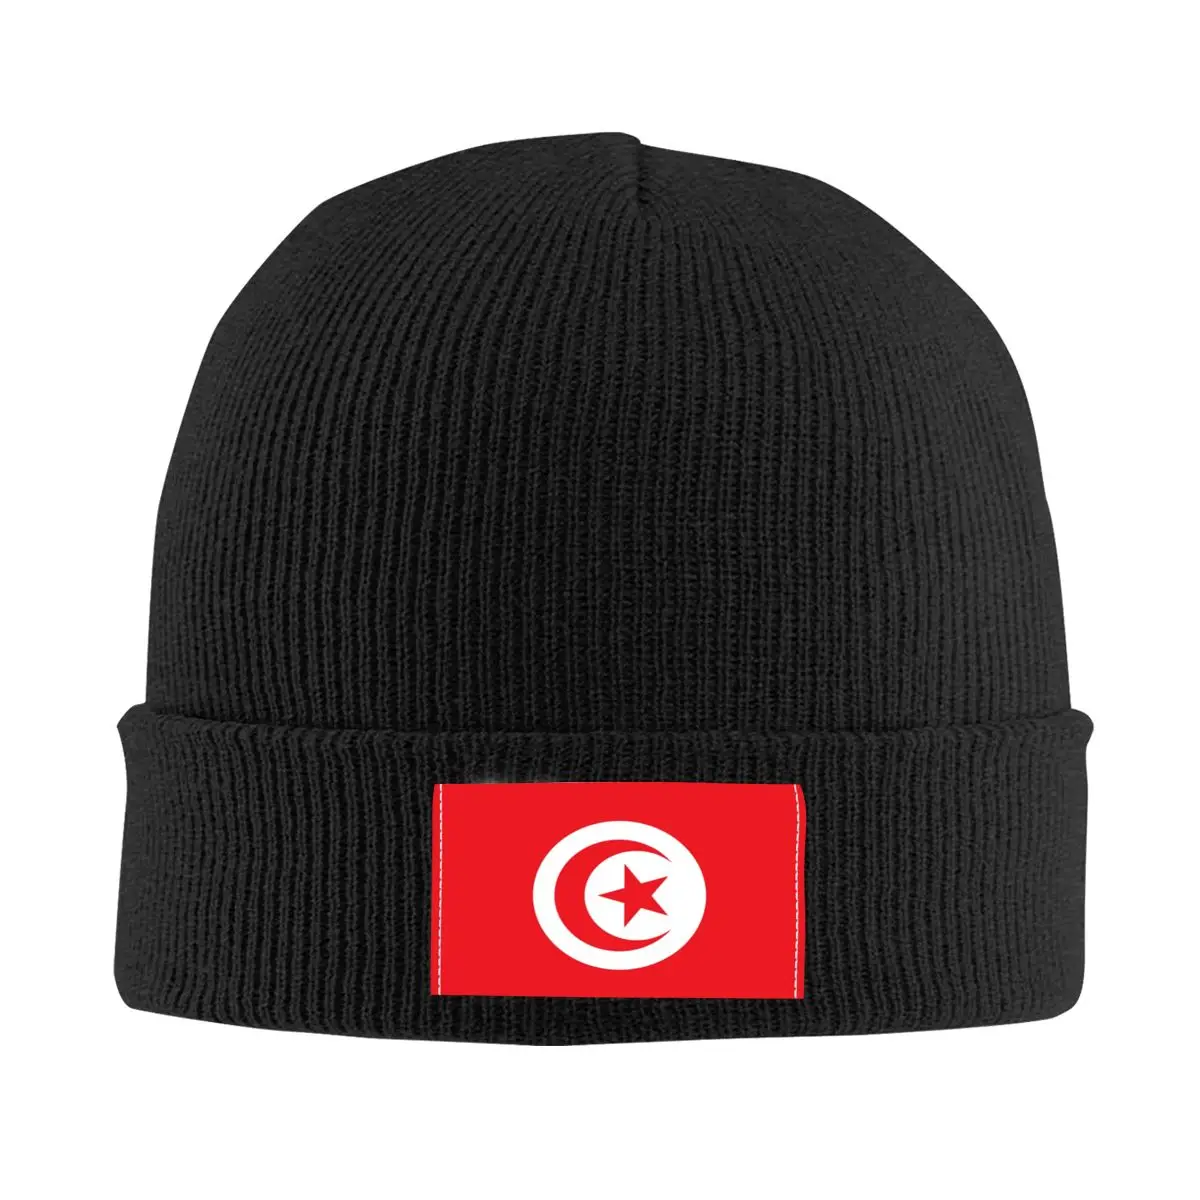 Tunisia Flag Skullies Beanies Caps Unisex Winter Warm Knit Hat Men Women Cool Adult Bonnet Hats Outdoor Ski Cap 1